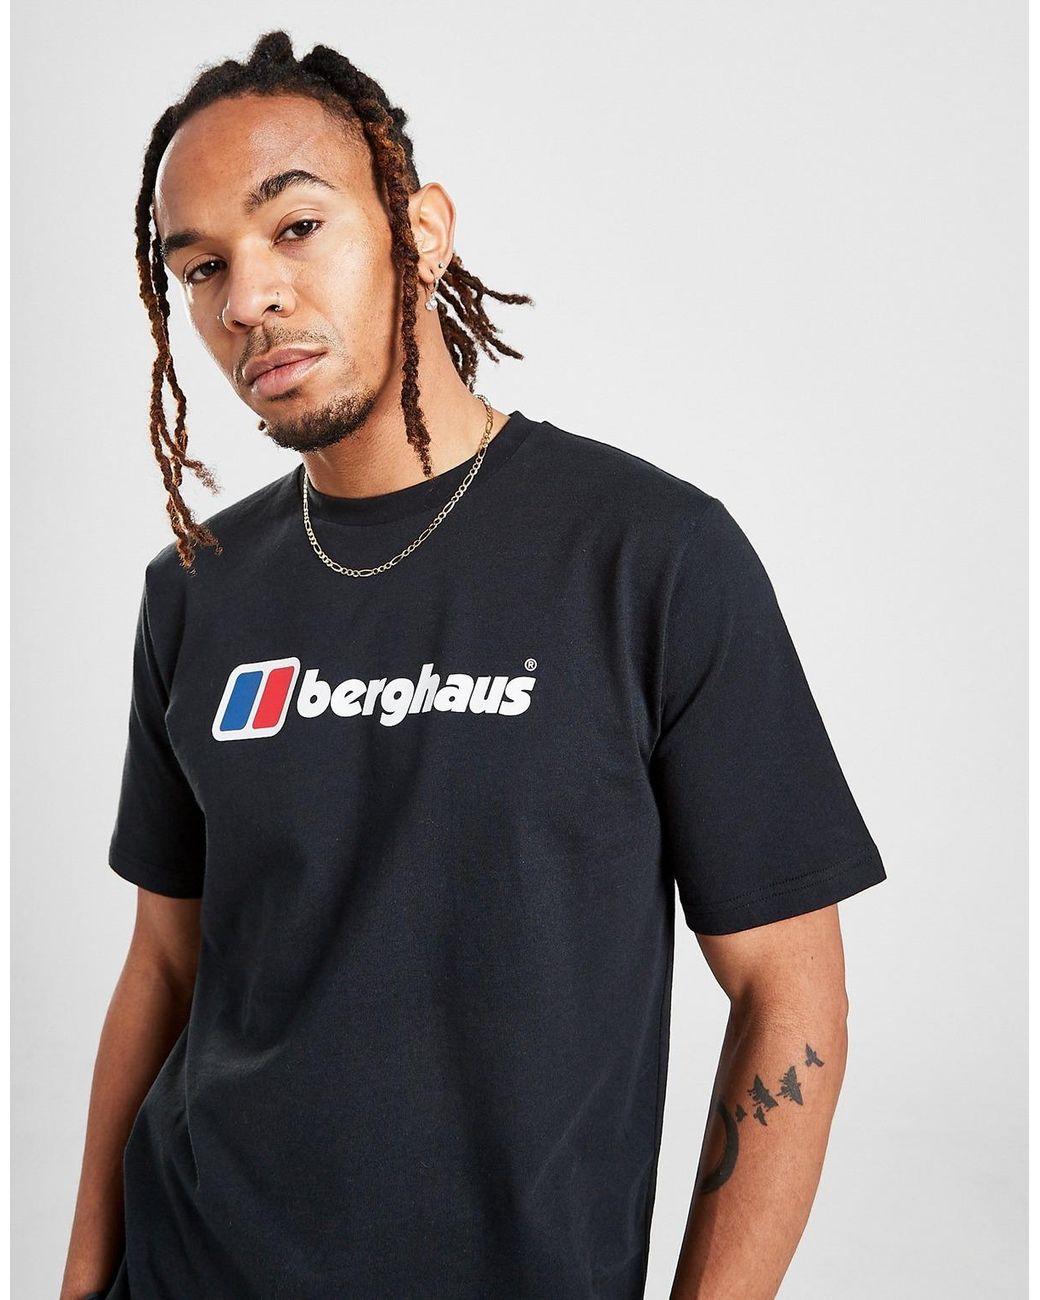 Berghaus Cotton Large Logo T-shirt in Black for Men - Lyst